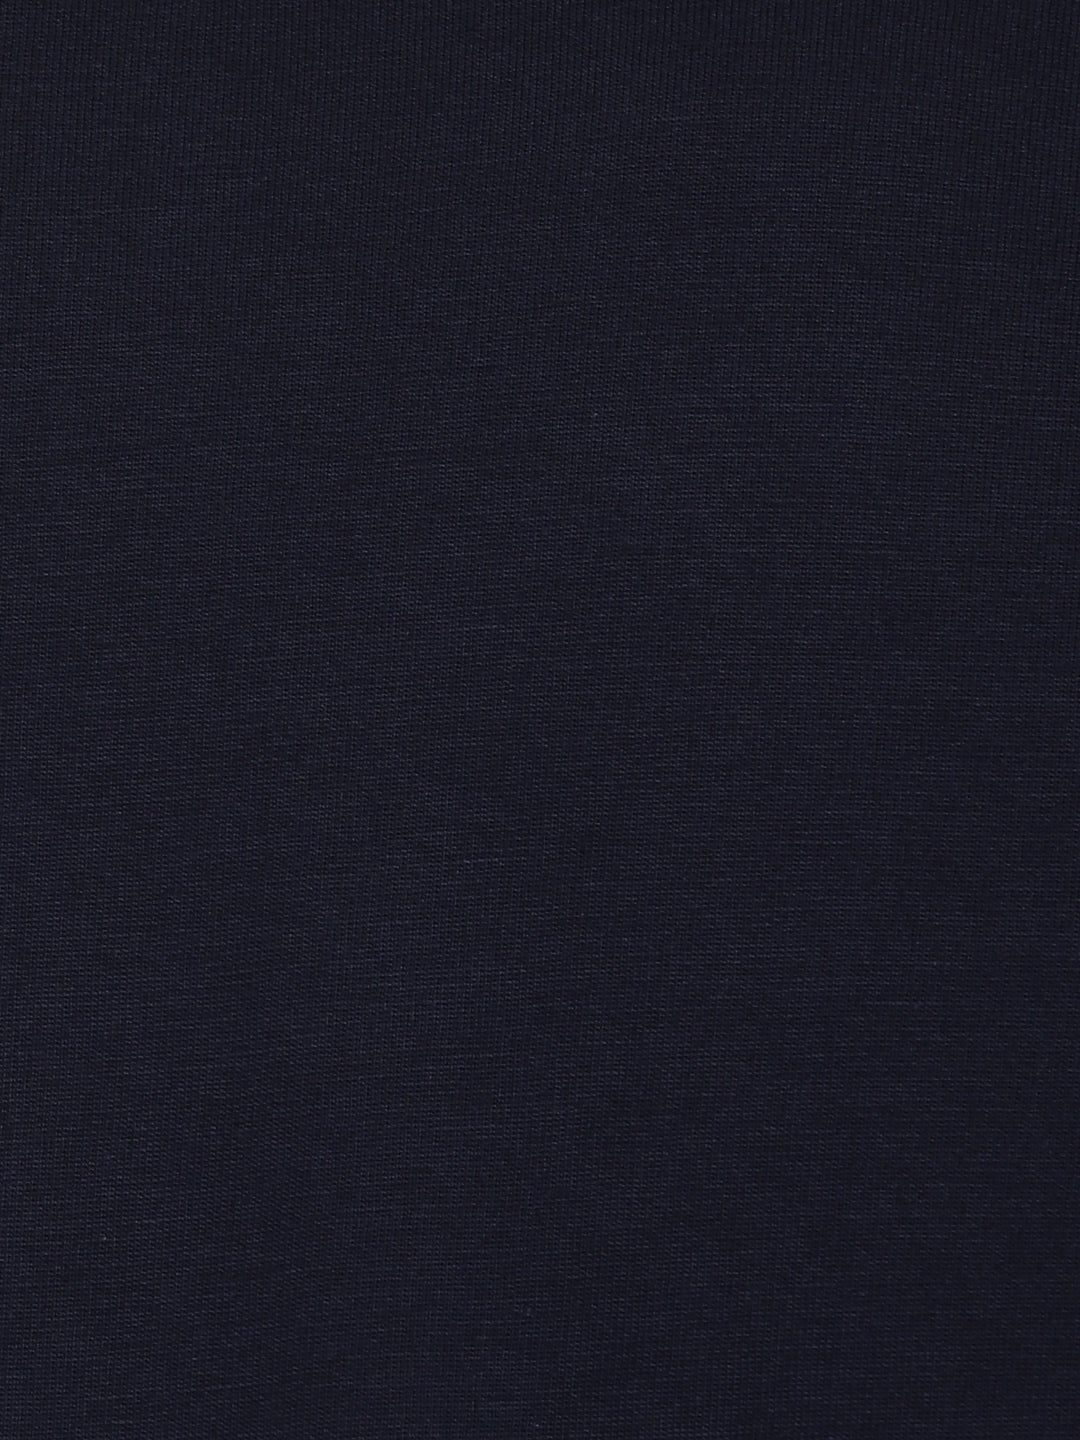 Supima Cotton Round Neck Full Sleeves T-Shirt for Men - Navy Blue